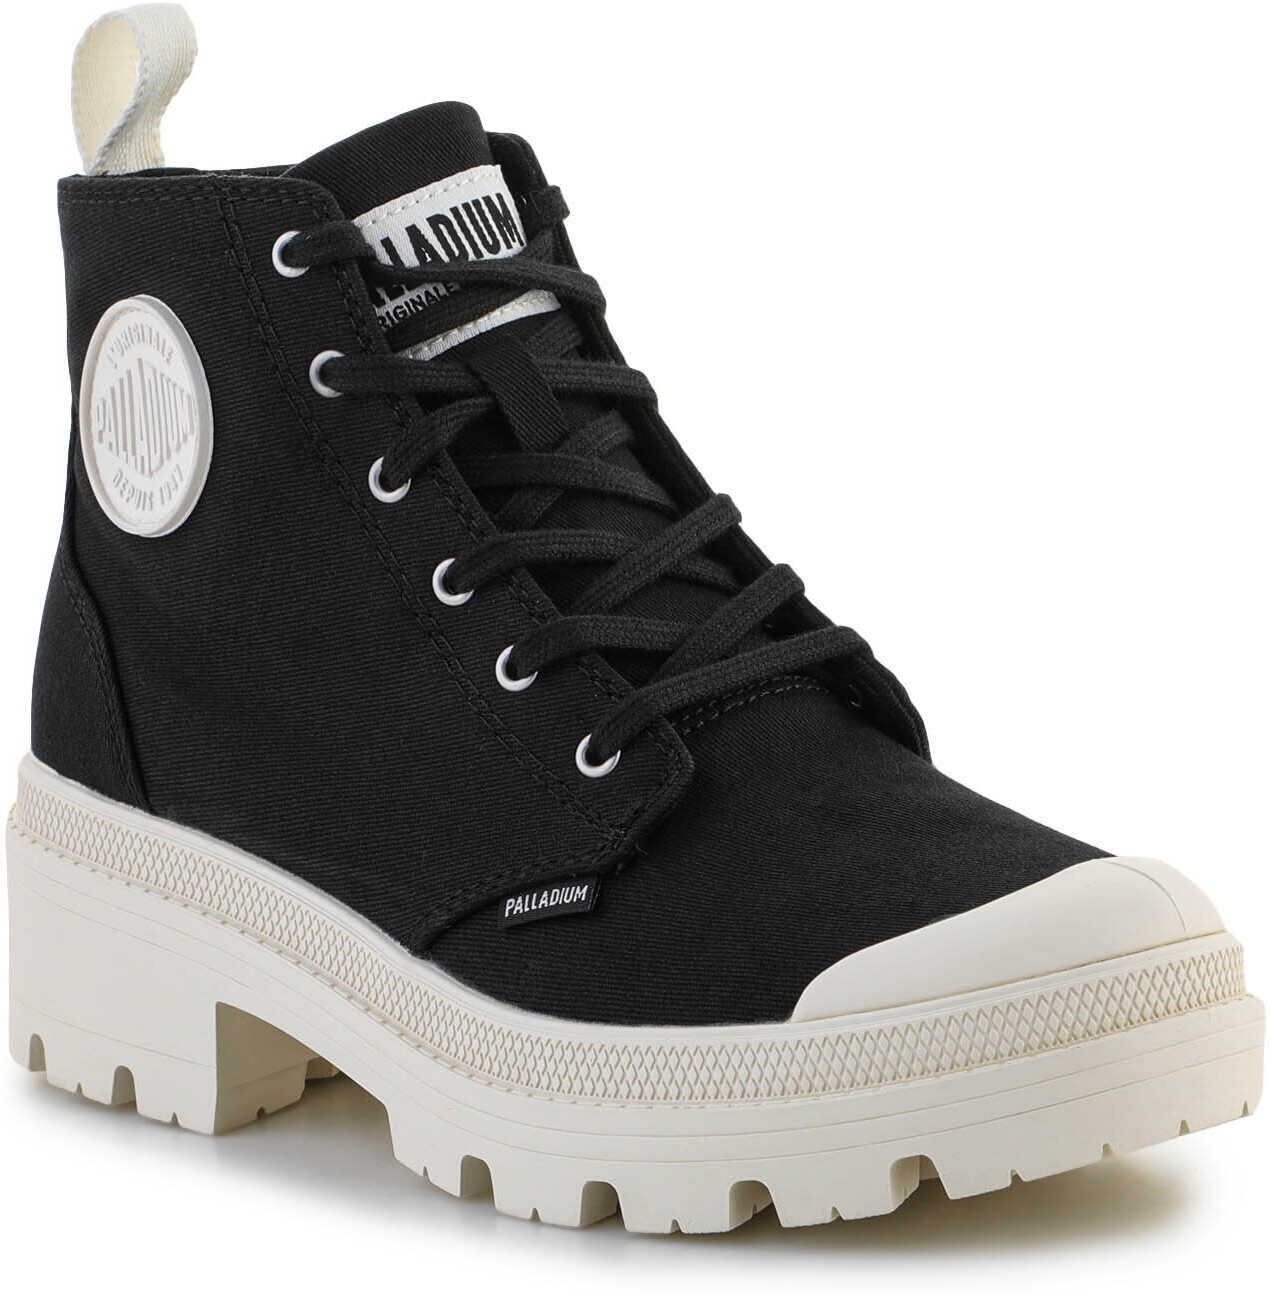 Palladium Pallabase Twill Black/Marshmallow lifestyle shoes Beige/Black